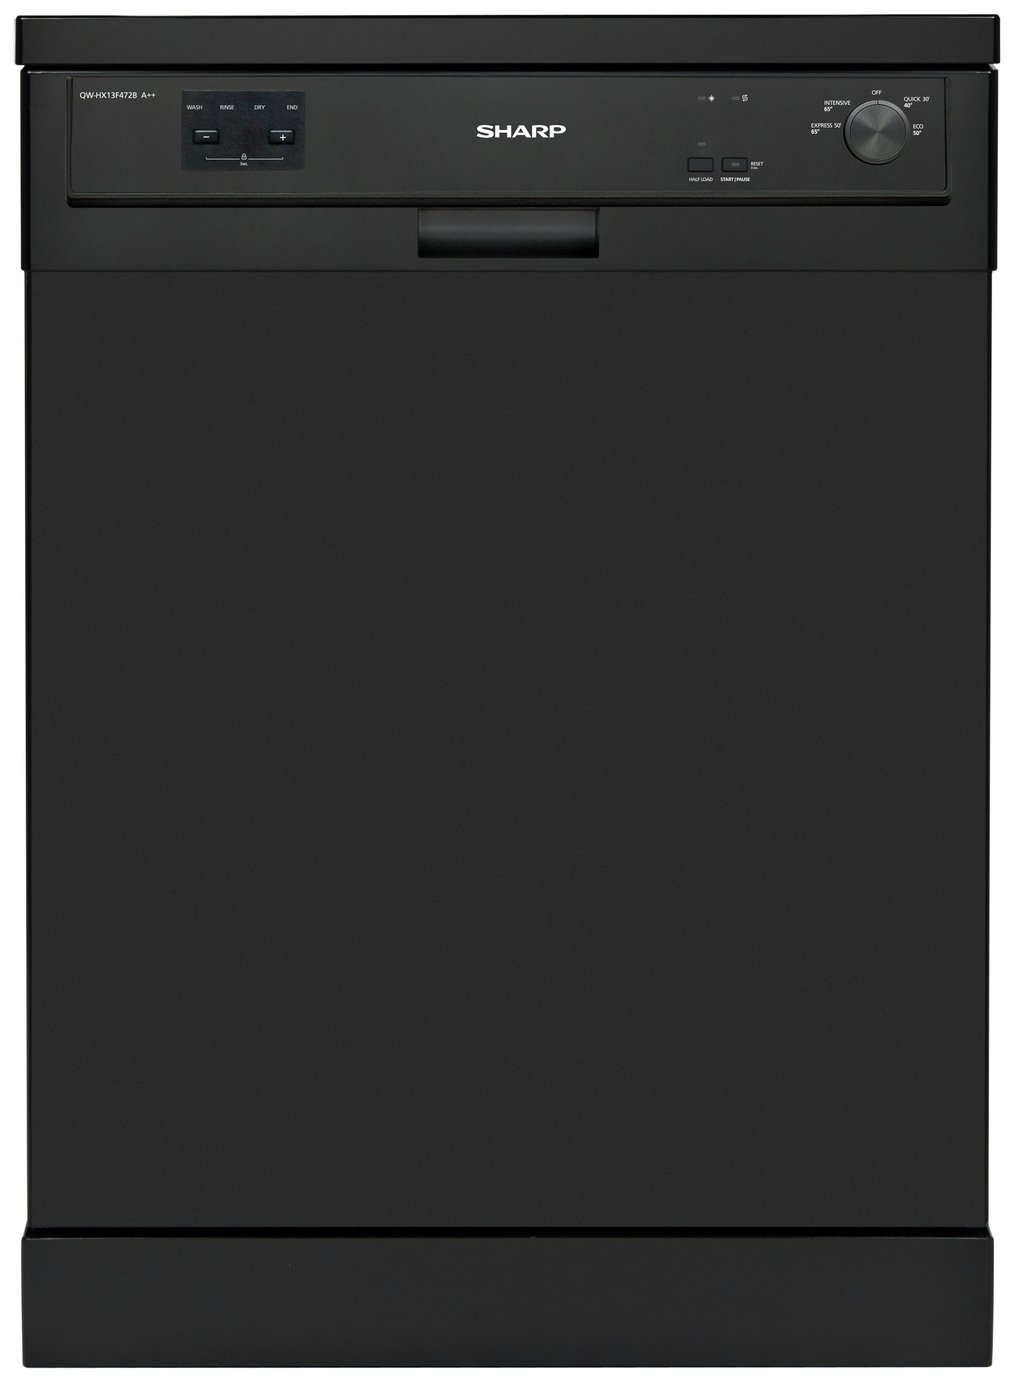 Sharp QW-HX13F472B Full Size Freestanding Dishwasher review